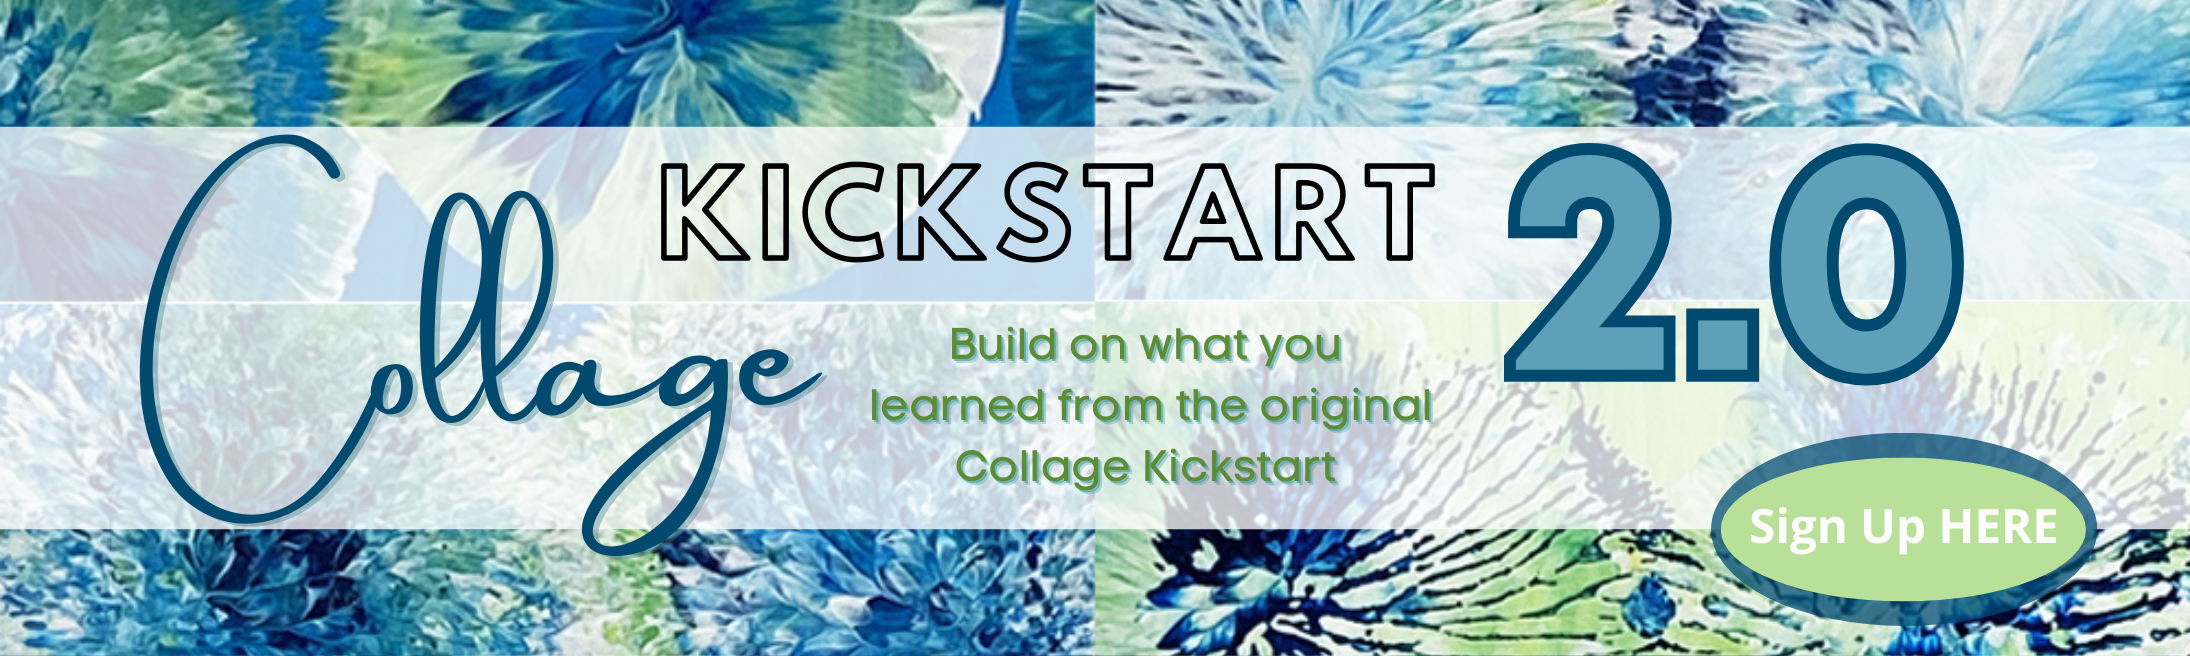 Collage Kickstart 2.0 – desktop banner 6.24